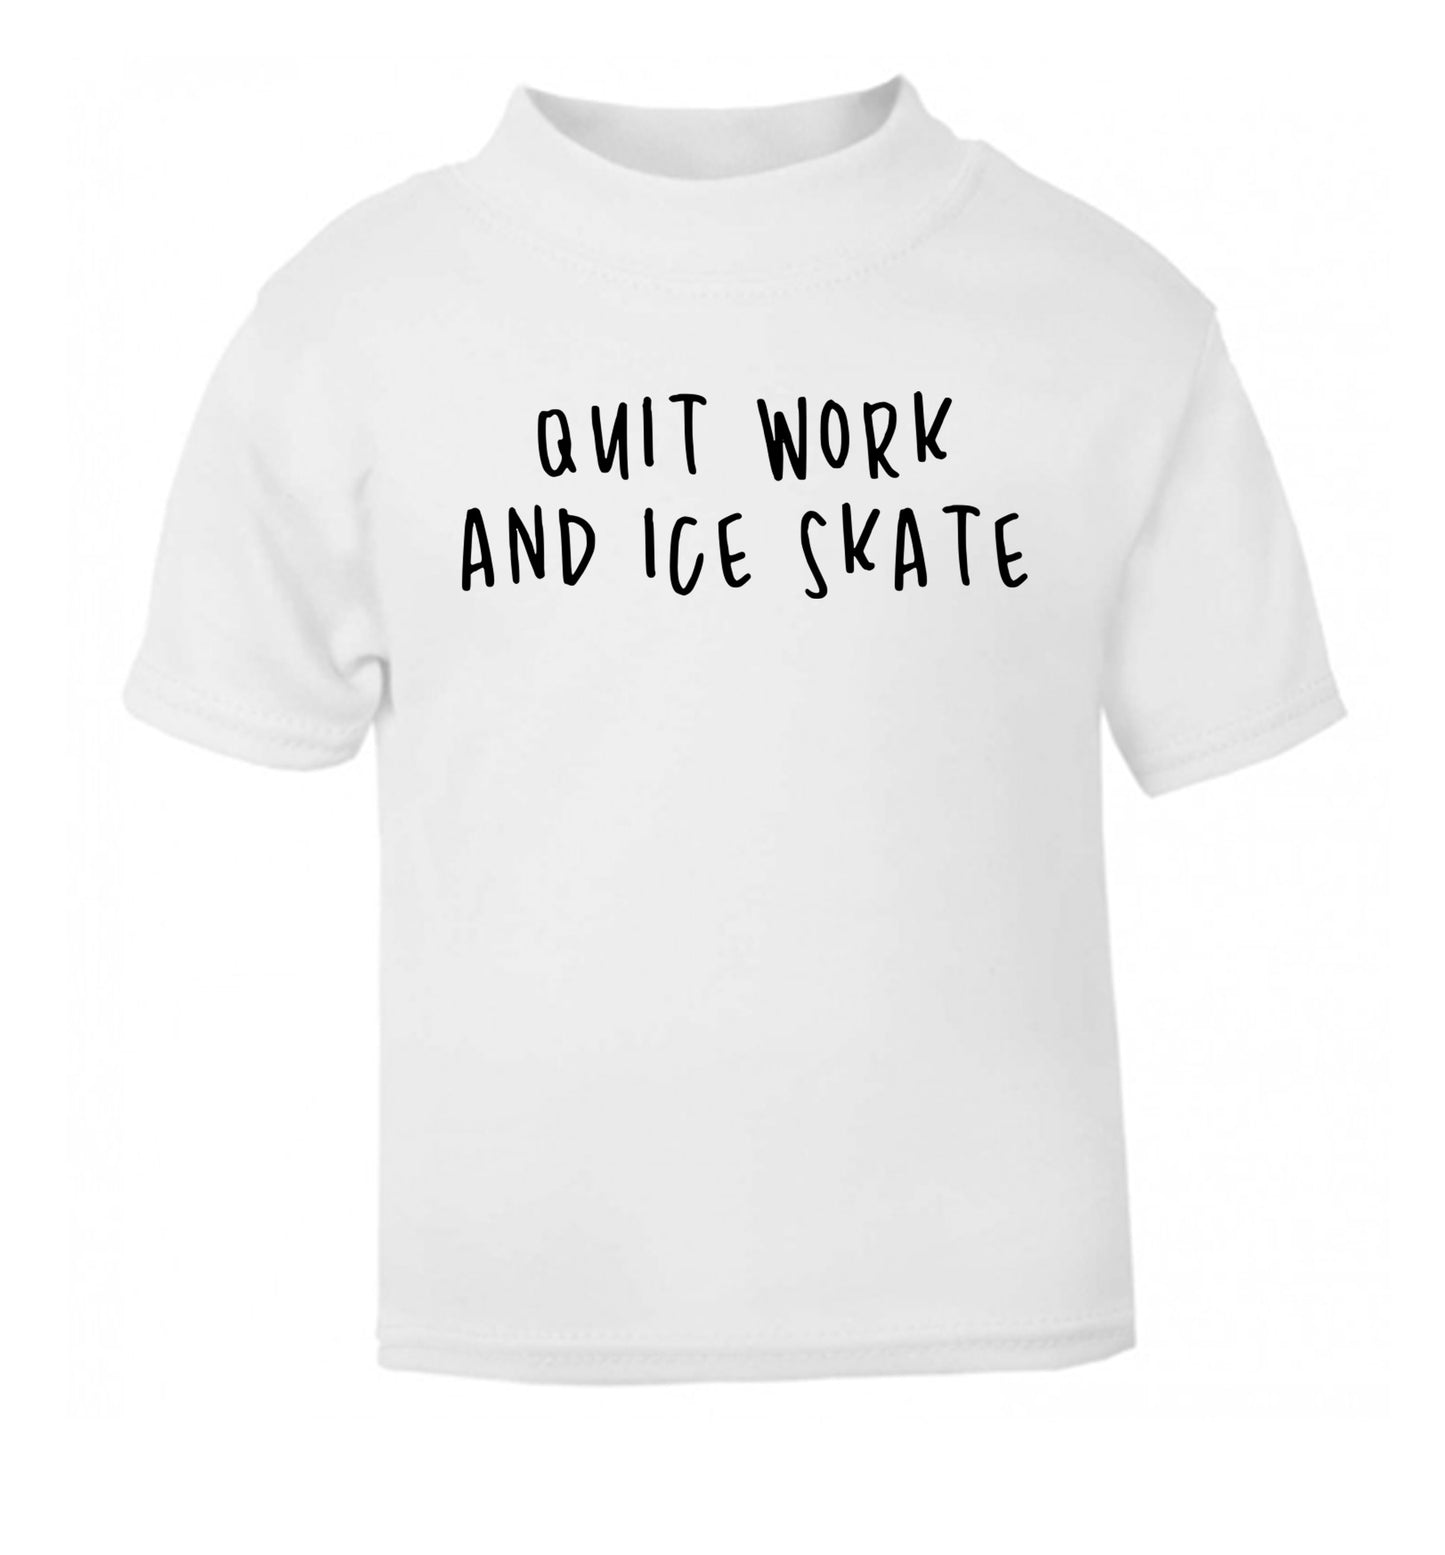 Quit work ice skate white Baby Toddler Tshirt 2 Years